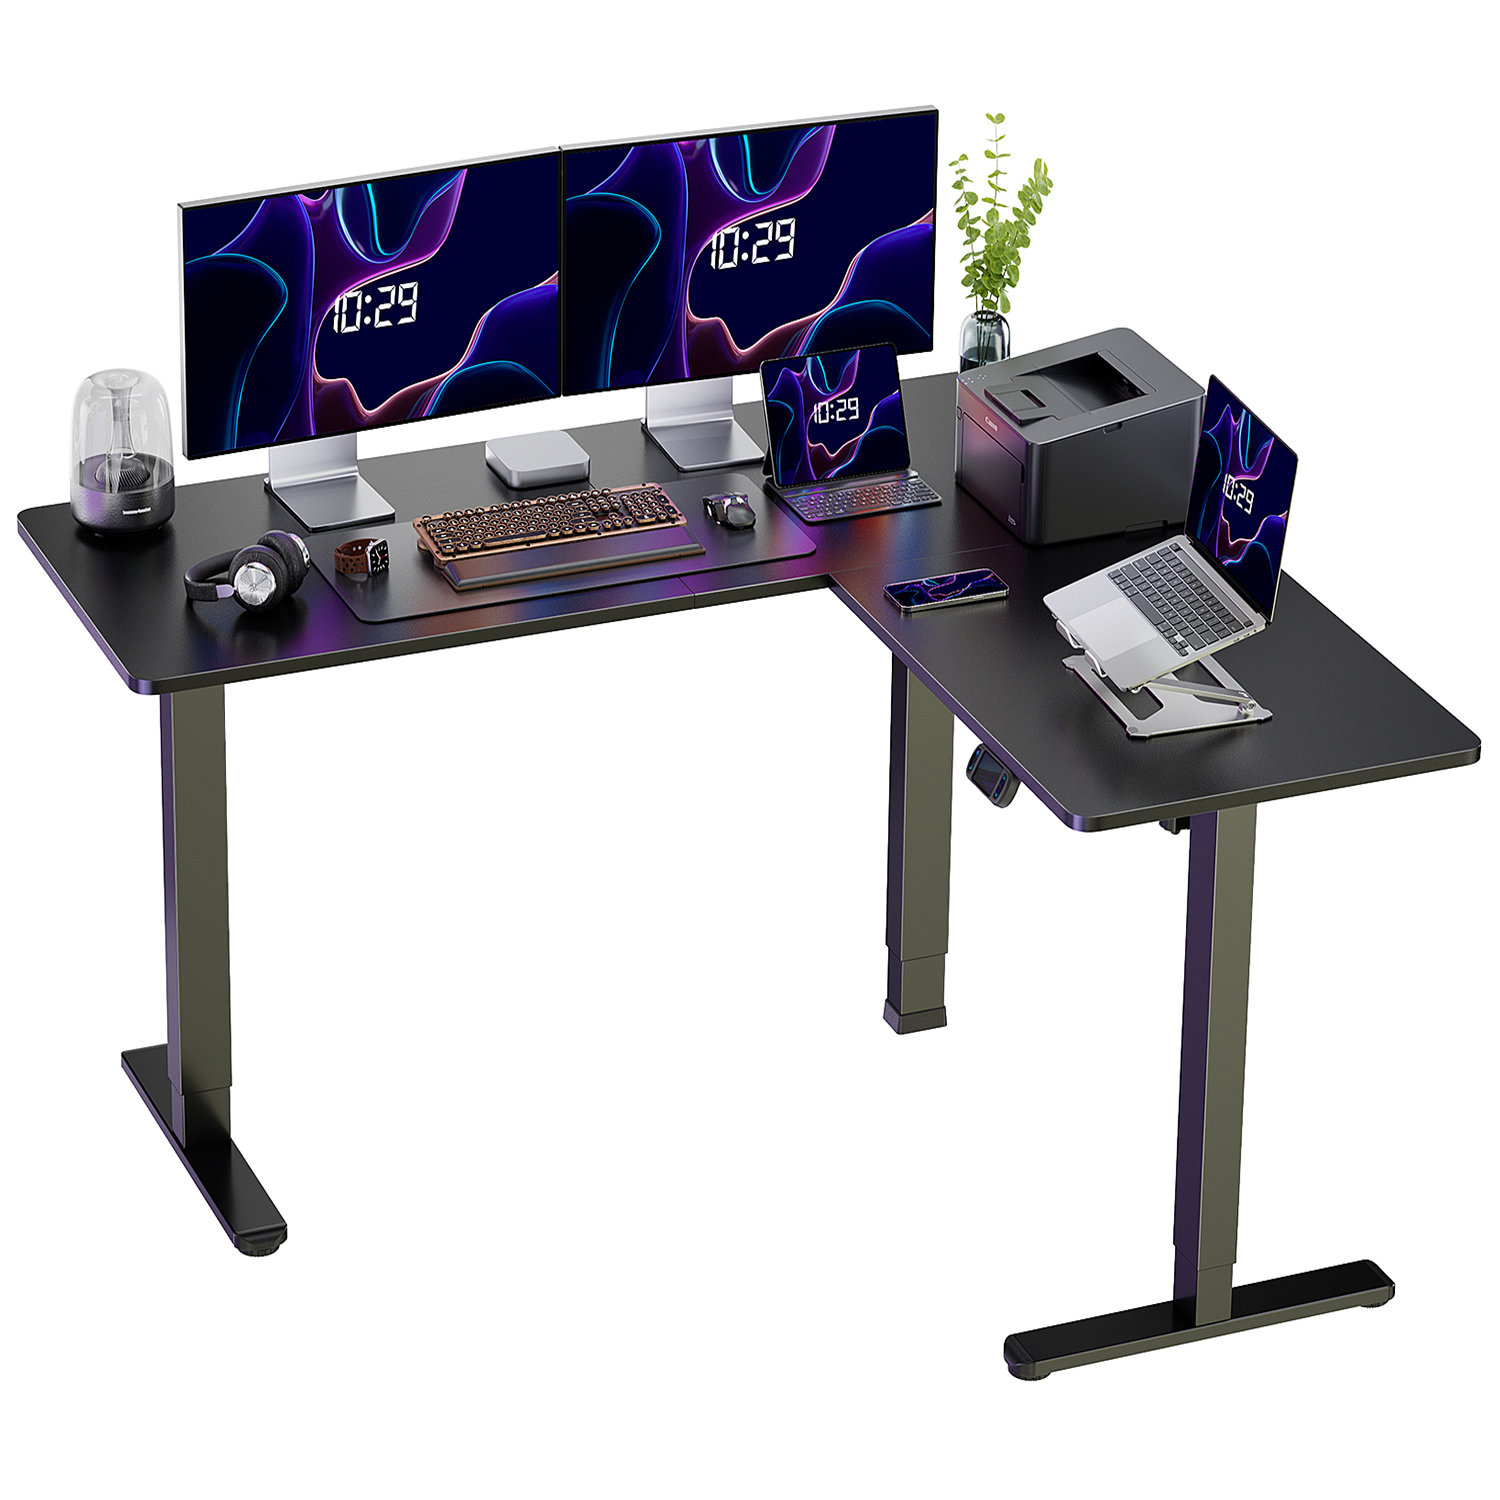 6 Best L-Shaped Standing Desks, Sit-Stand Desks